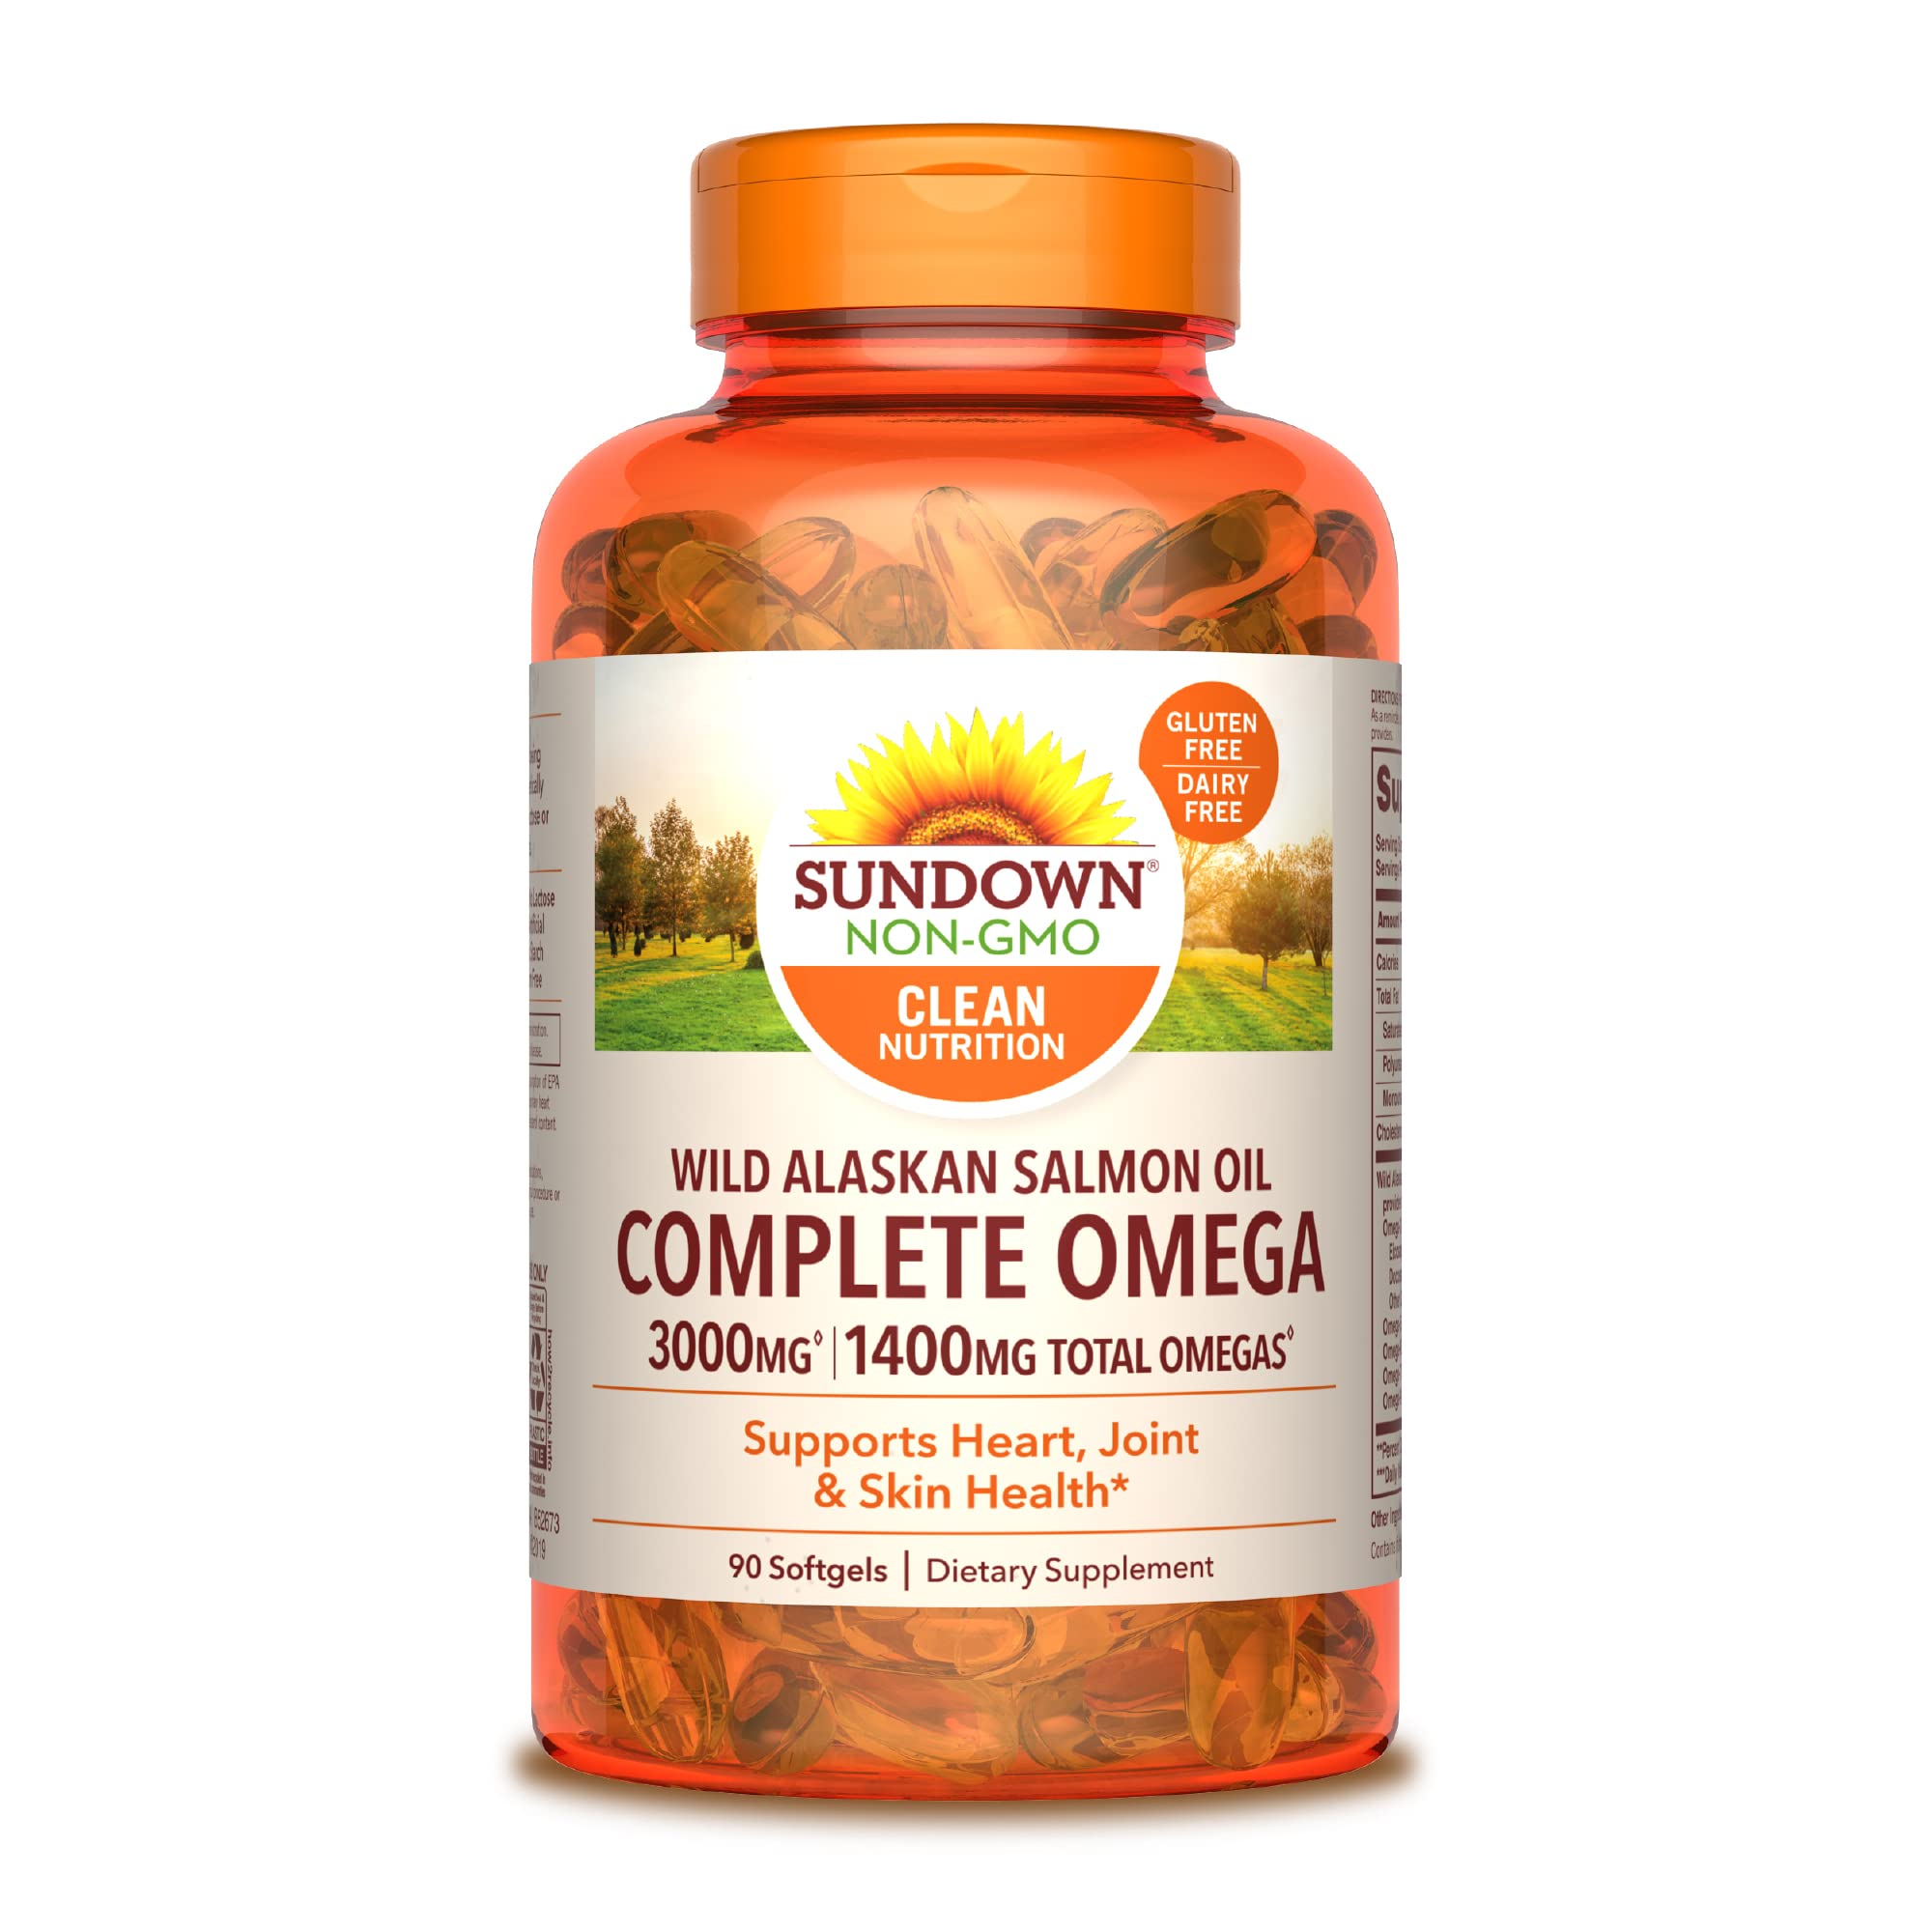 Sundown Complete Omega Wild Alaskan Salmon Oil Softgel, 1400 mg, 90 Softgels (Packaging May Vary)